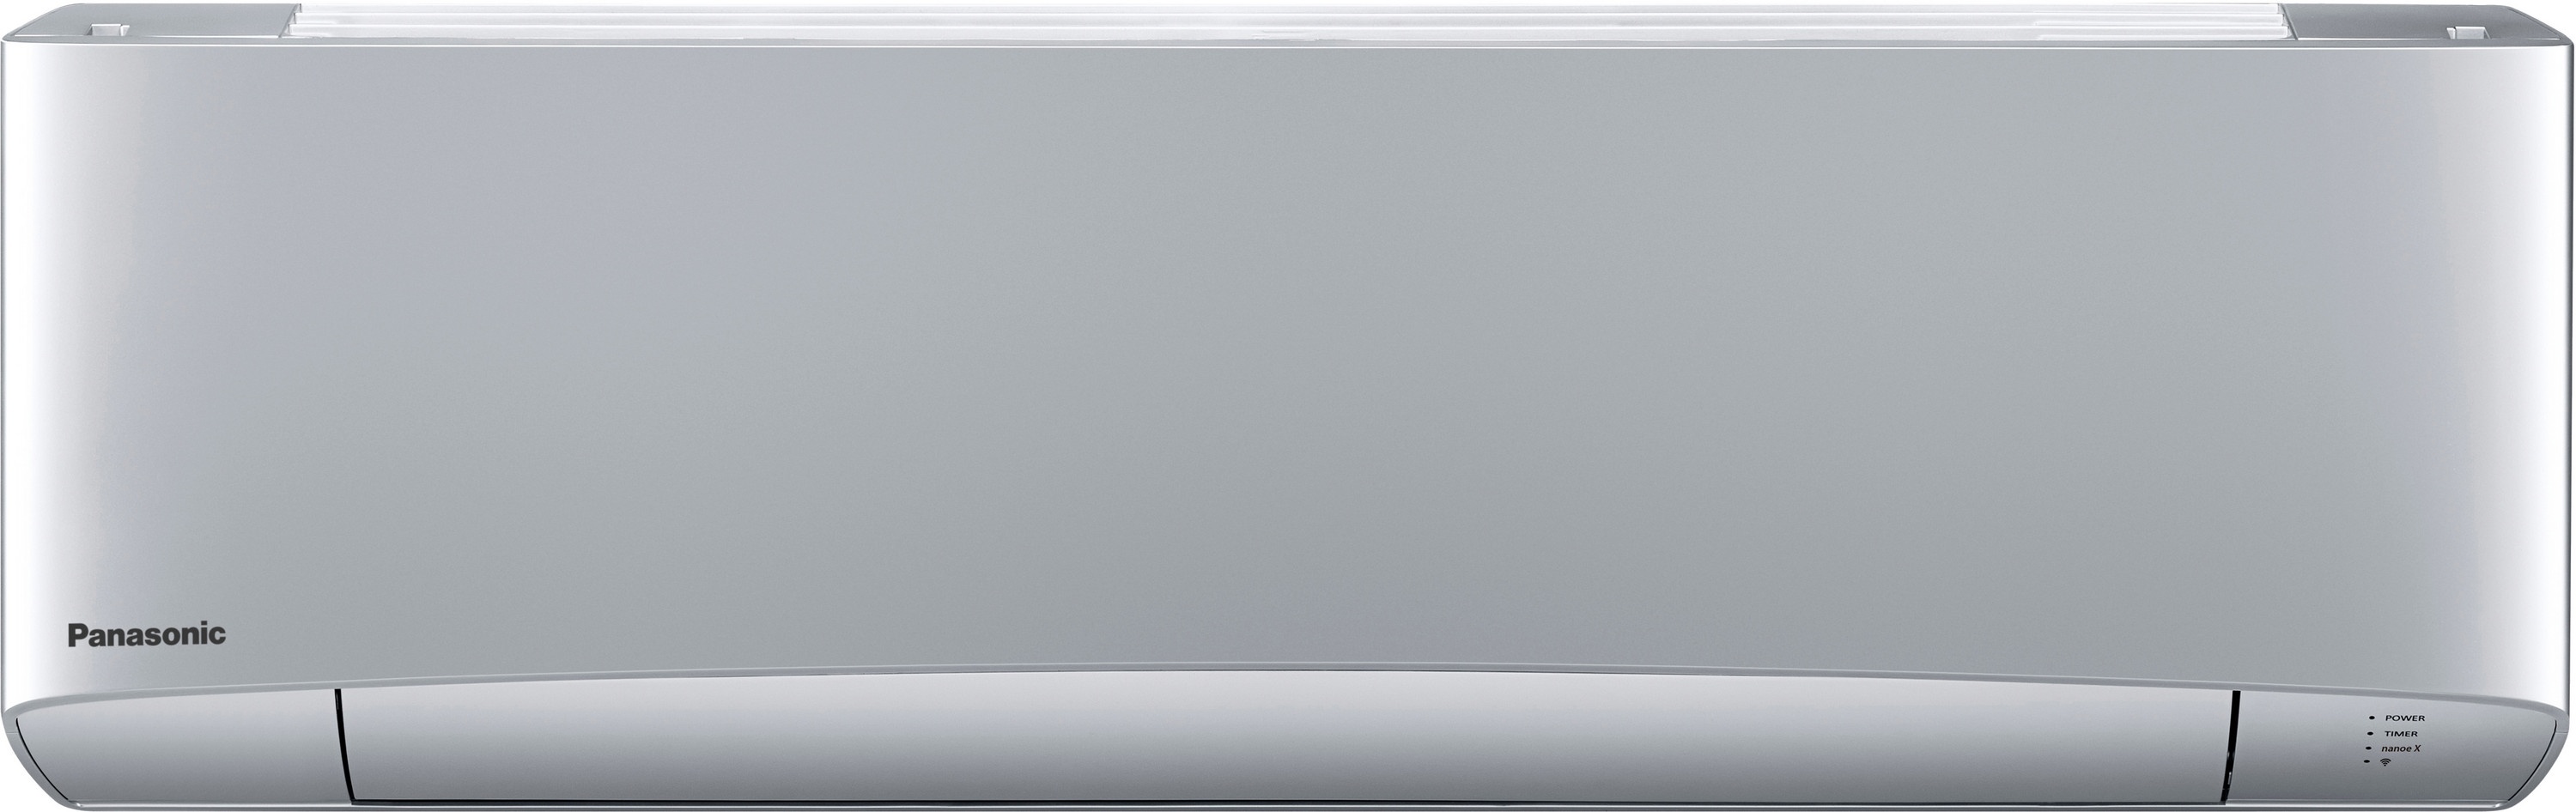 Кондиционер сплит-система Panasonic Flagship Silver CS/CU-XZ20TKEW цена 39999.00 грн - фотография 2